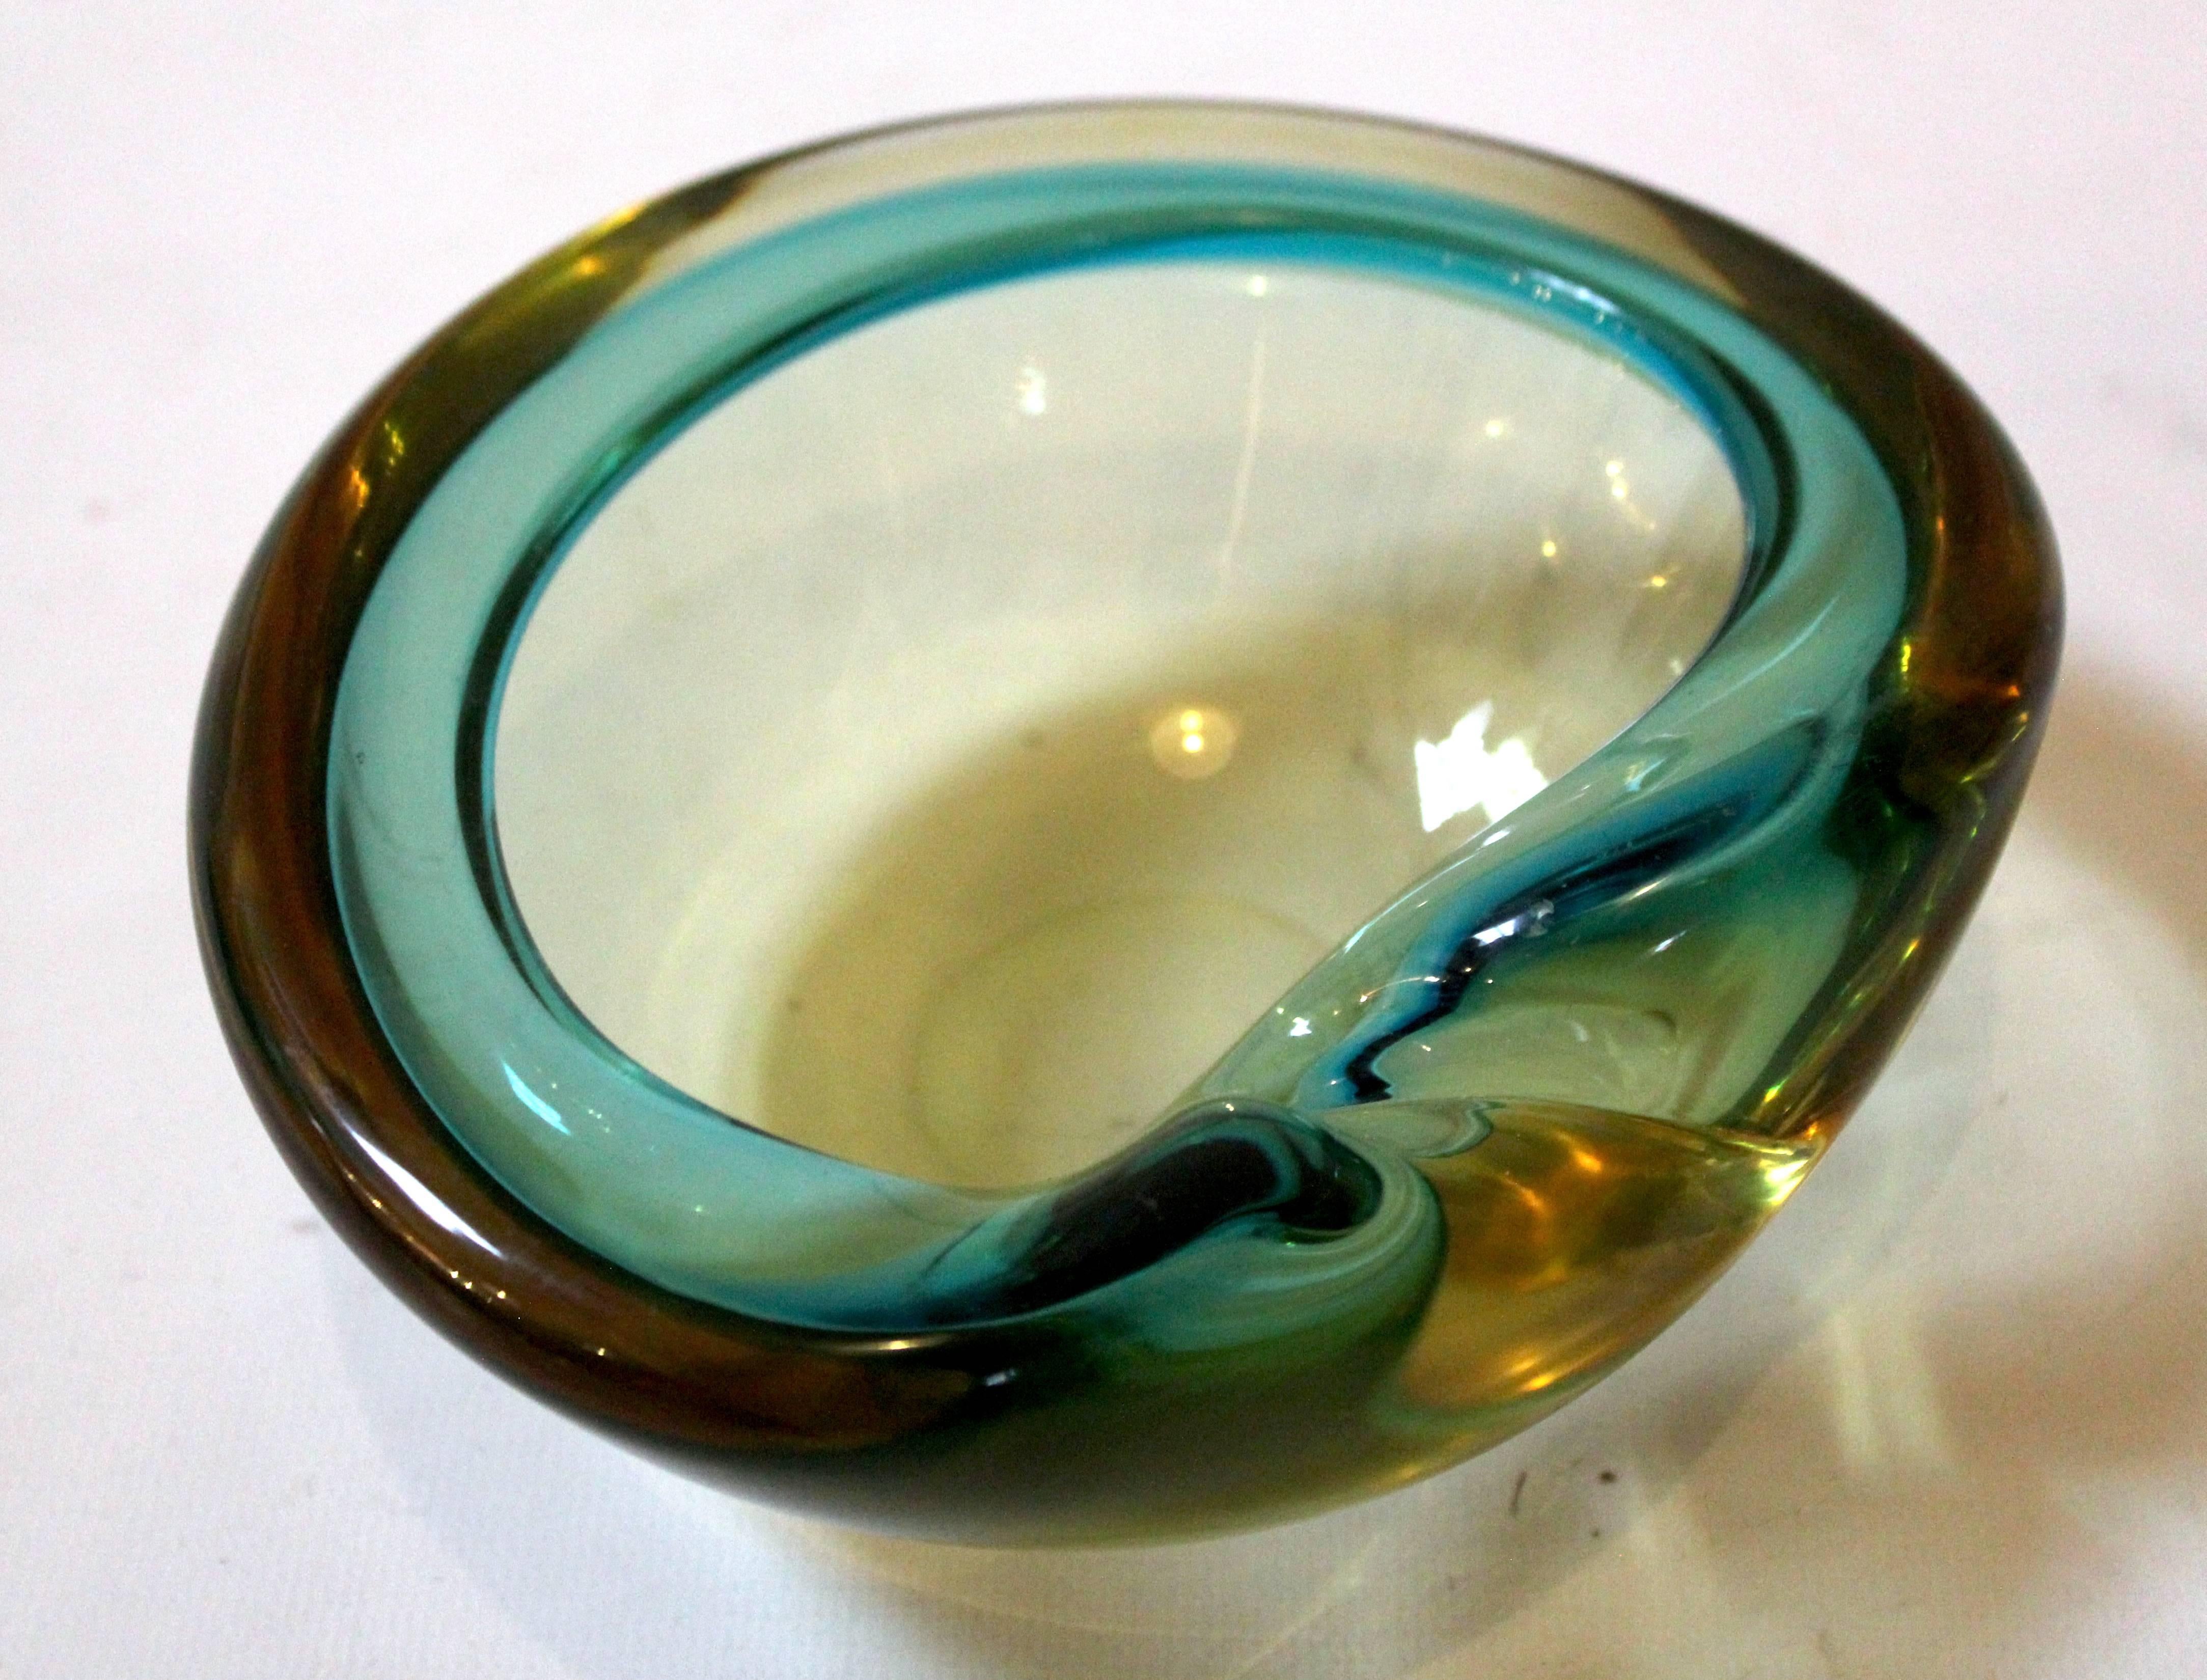 Vintage Murano art glass ashtray or decorative bowl.